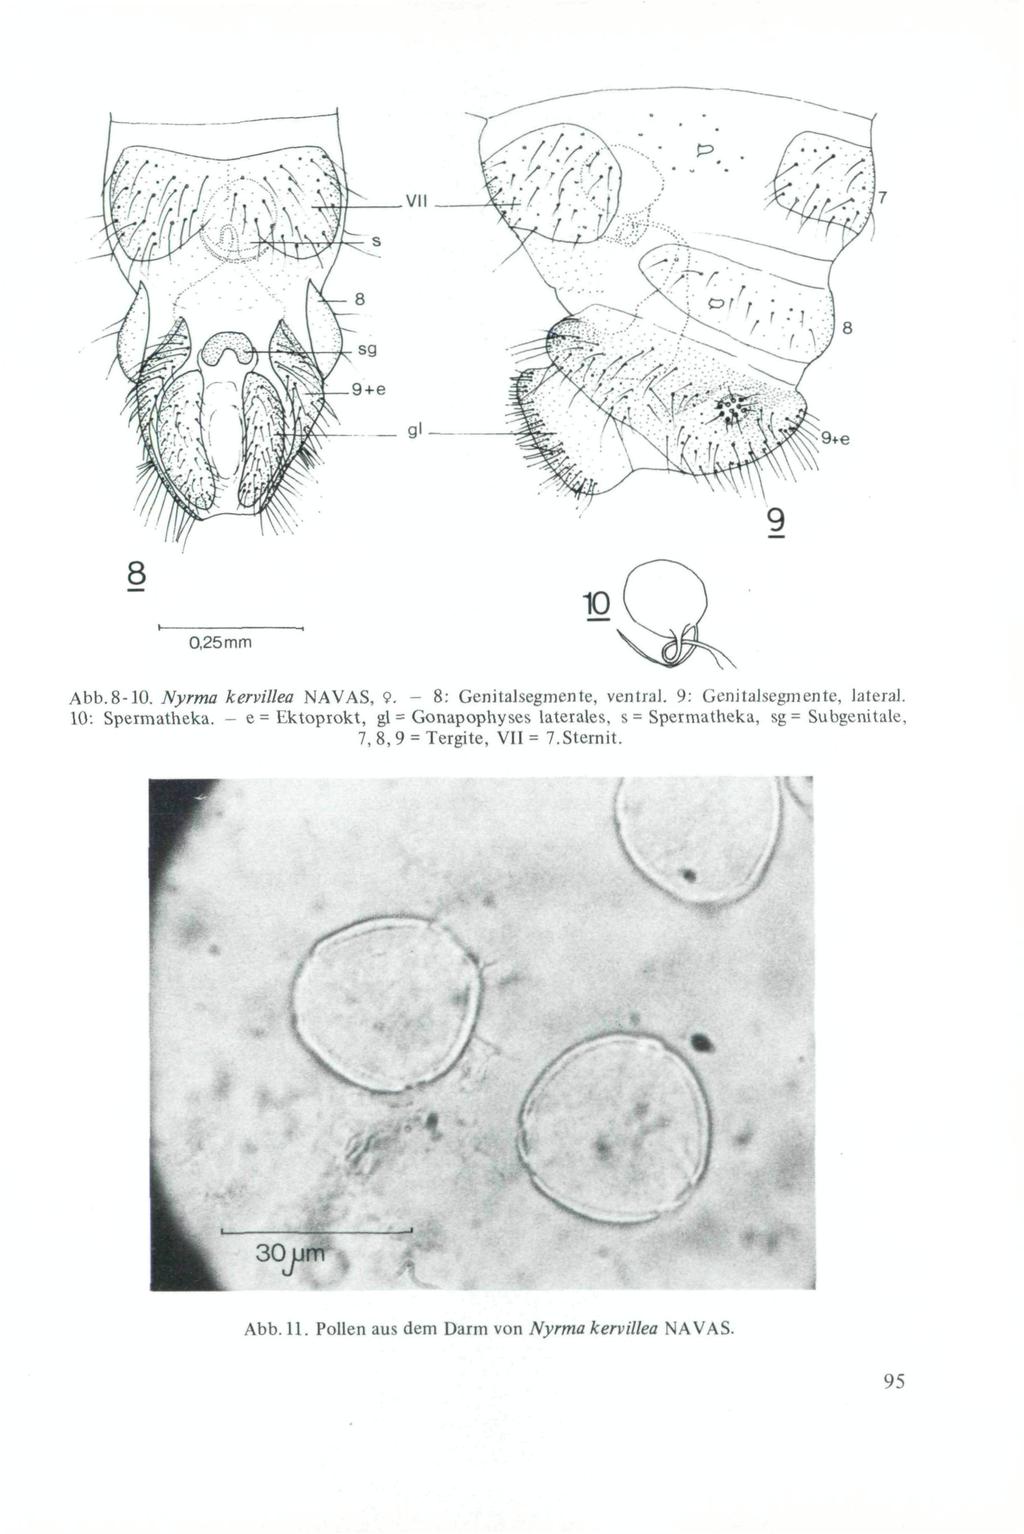 8 0,25 mm Abb. 8-10. Nyrma kervillea NAVAS, 9. - 8: Genitalsegmente, ventral. 9: Genitalsegmente, lateral. 10: Spermatheka.